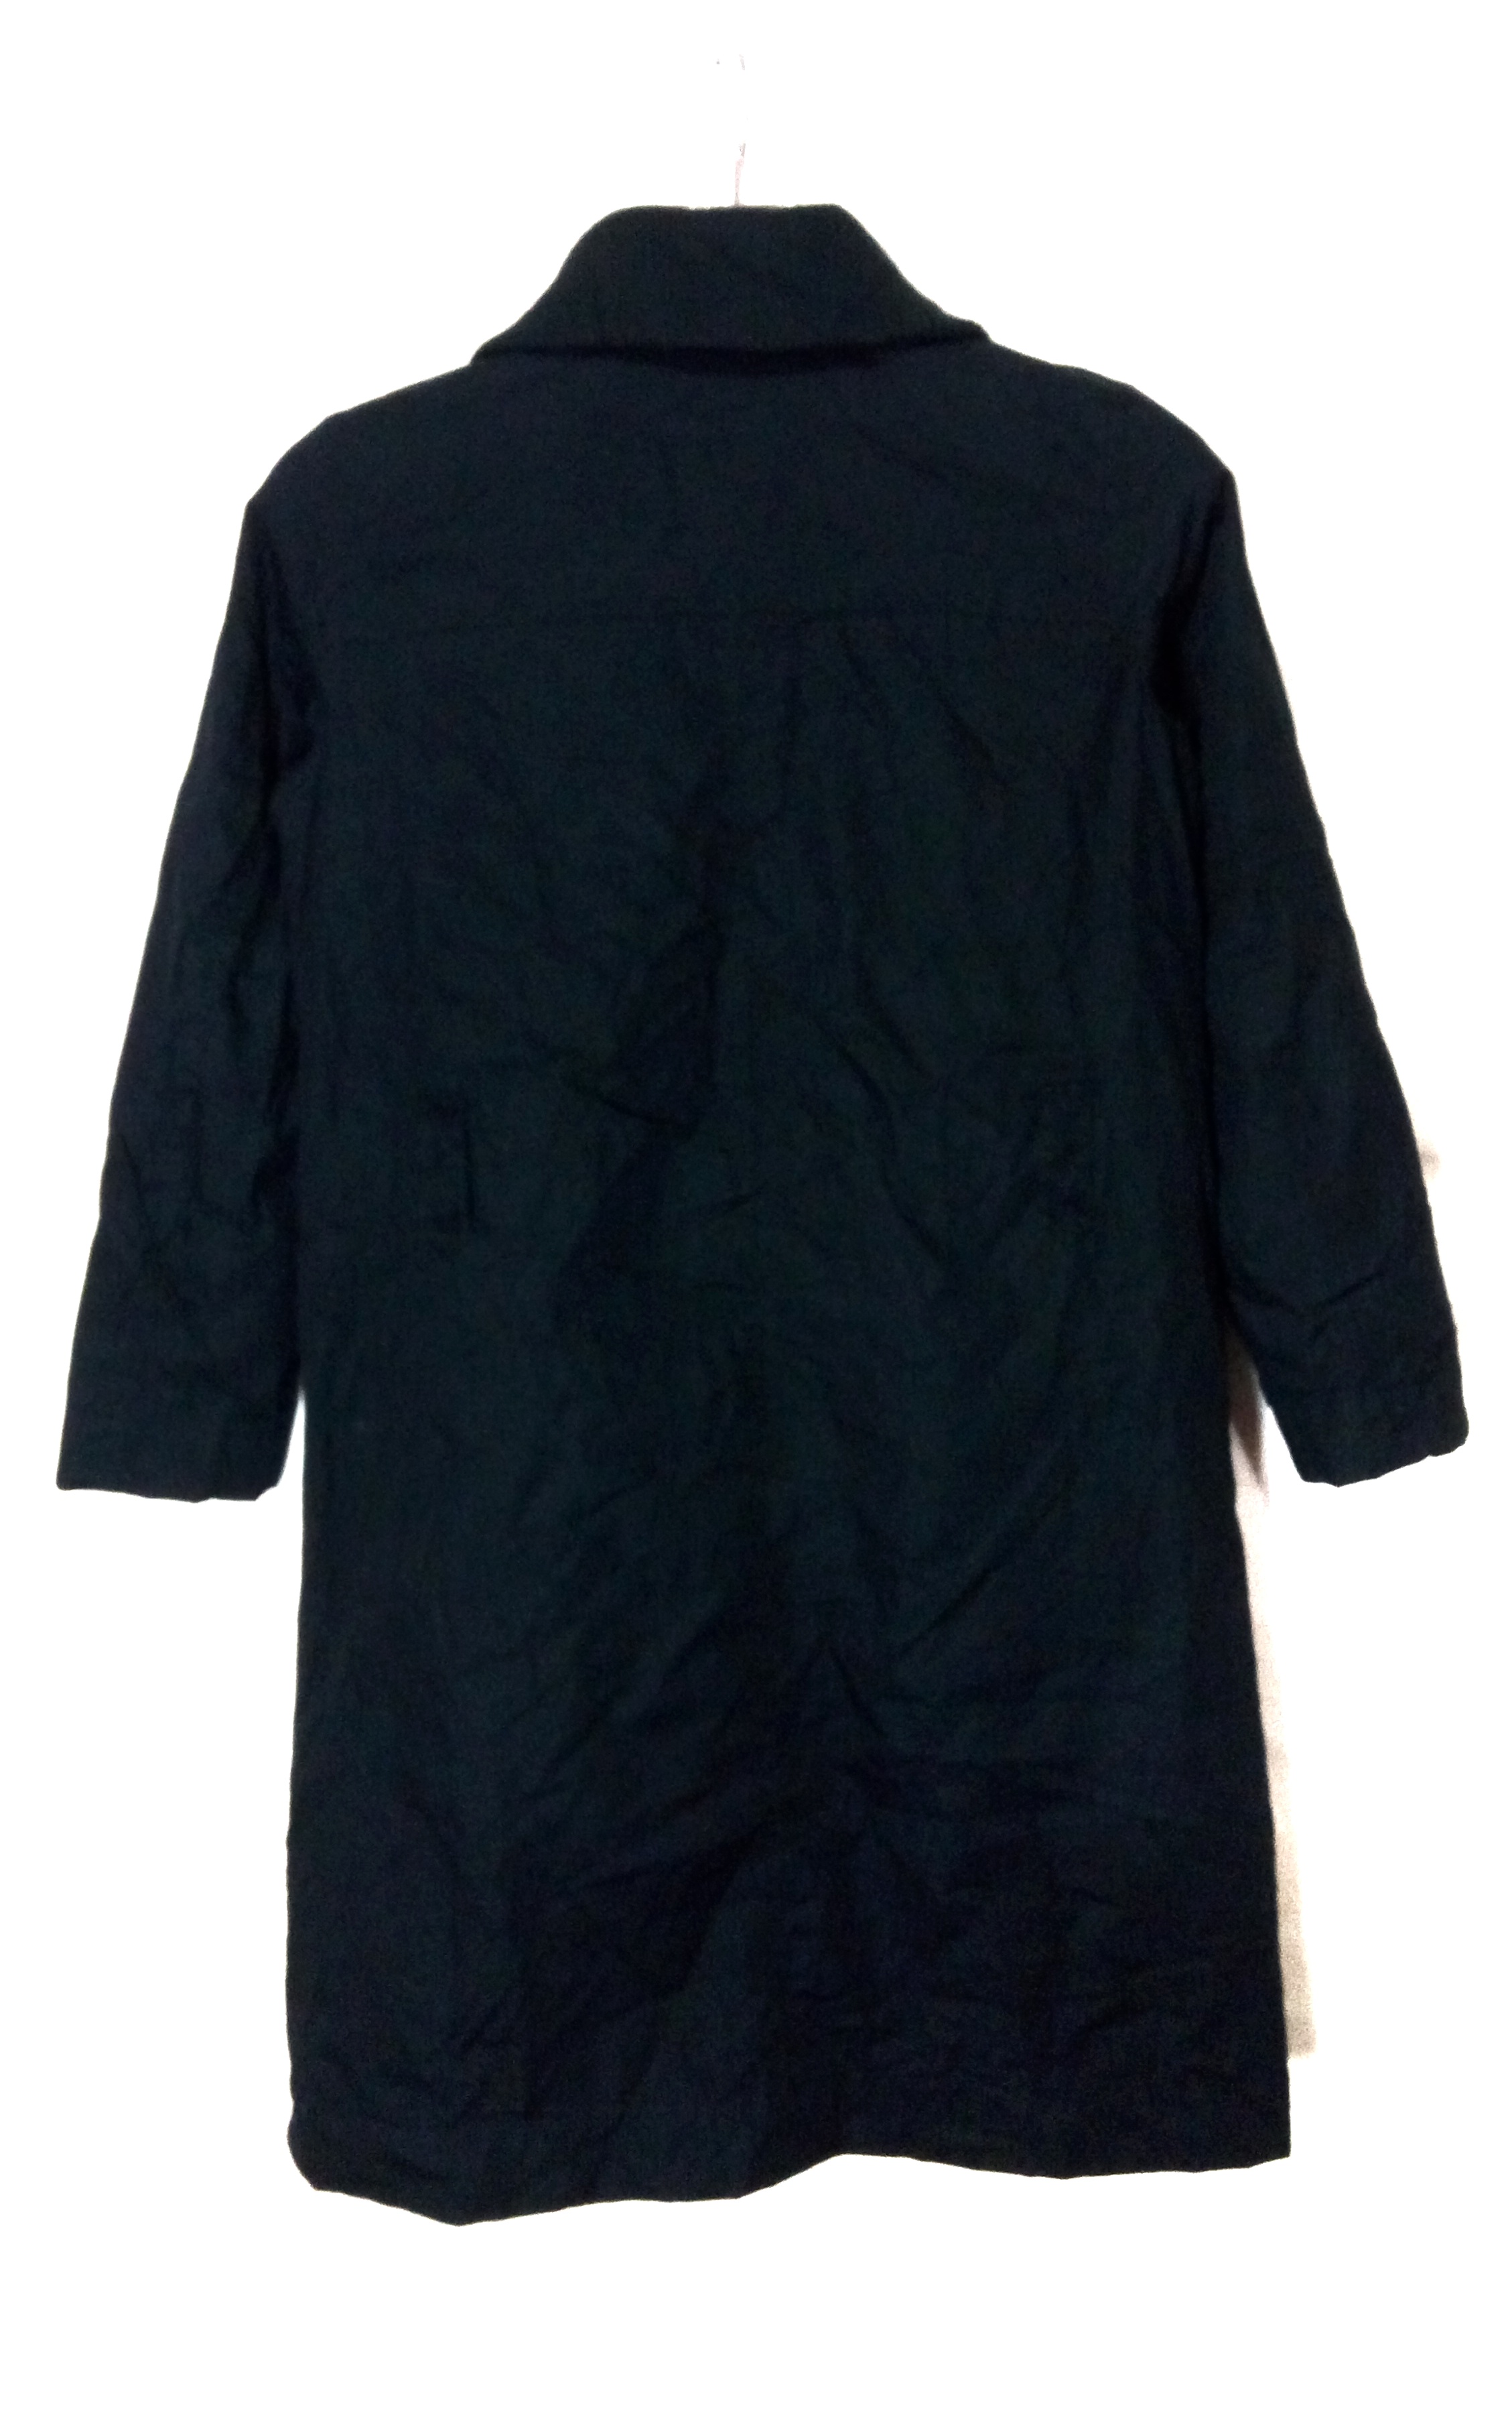 Lacoste parka long jacket dark blue color - 2